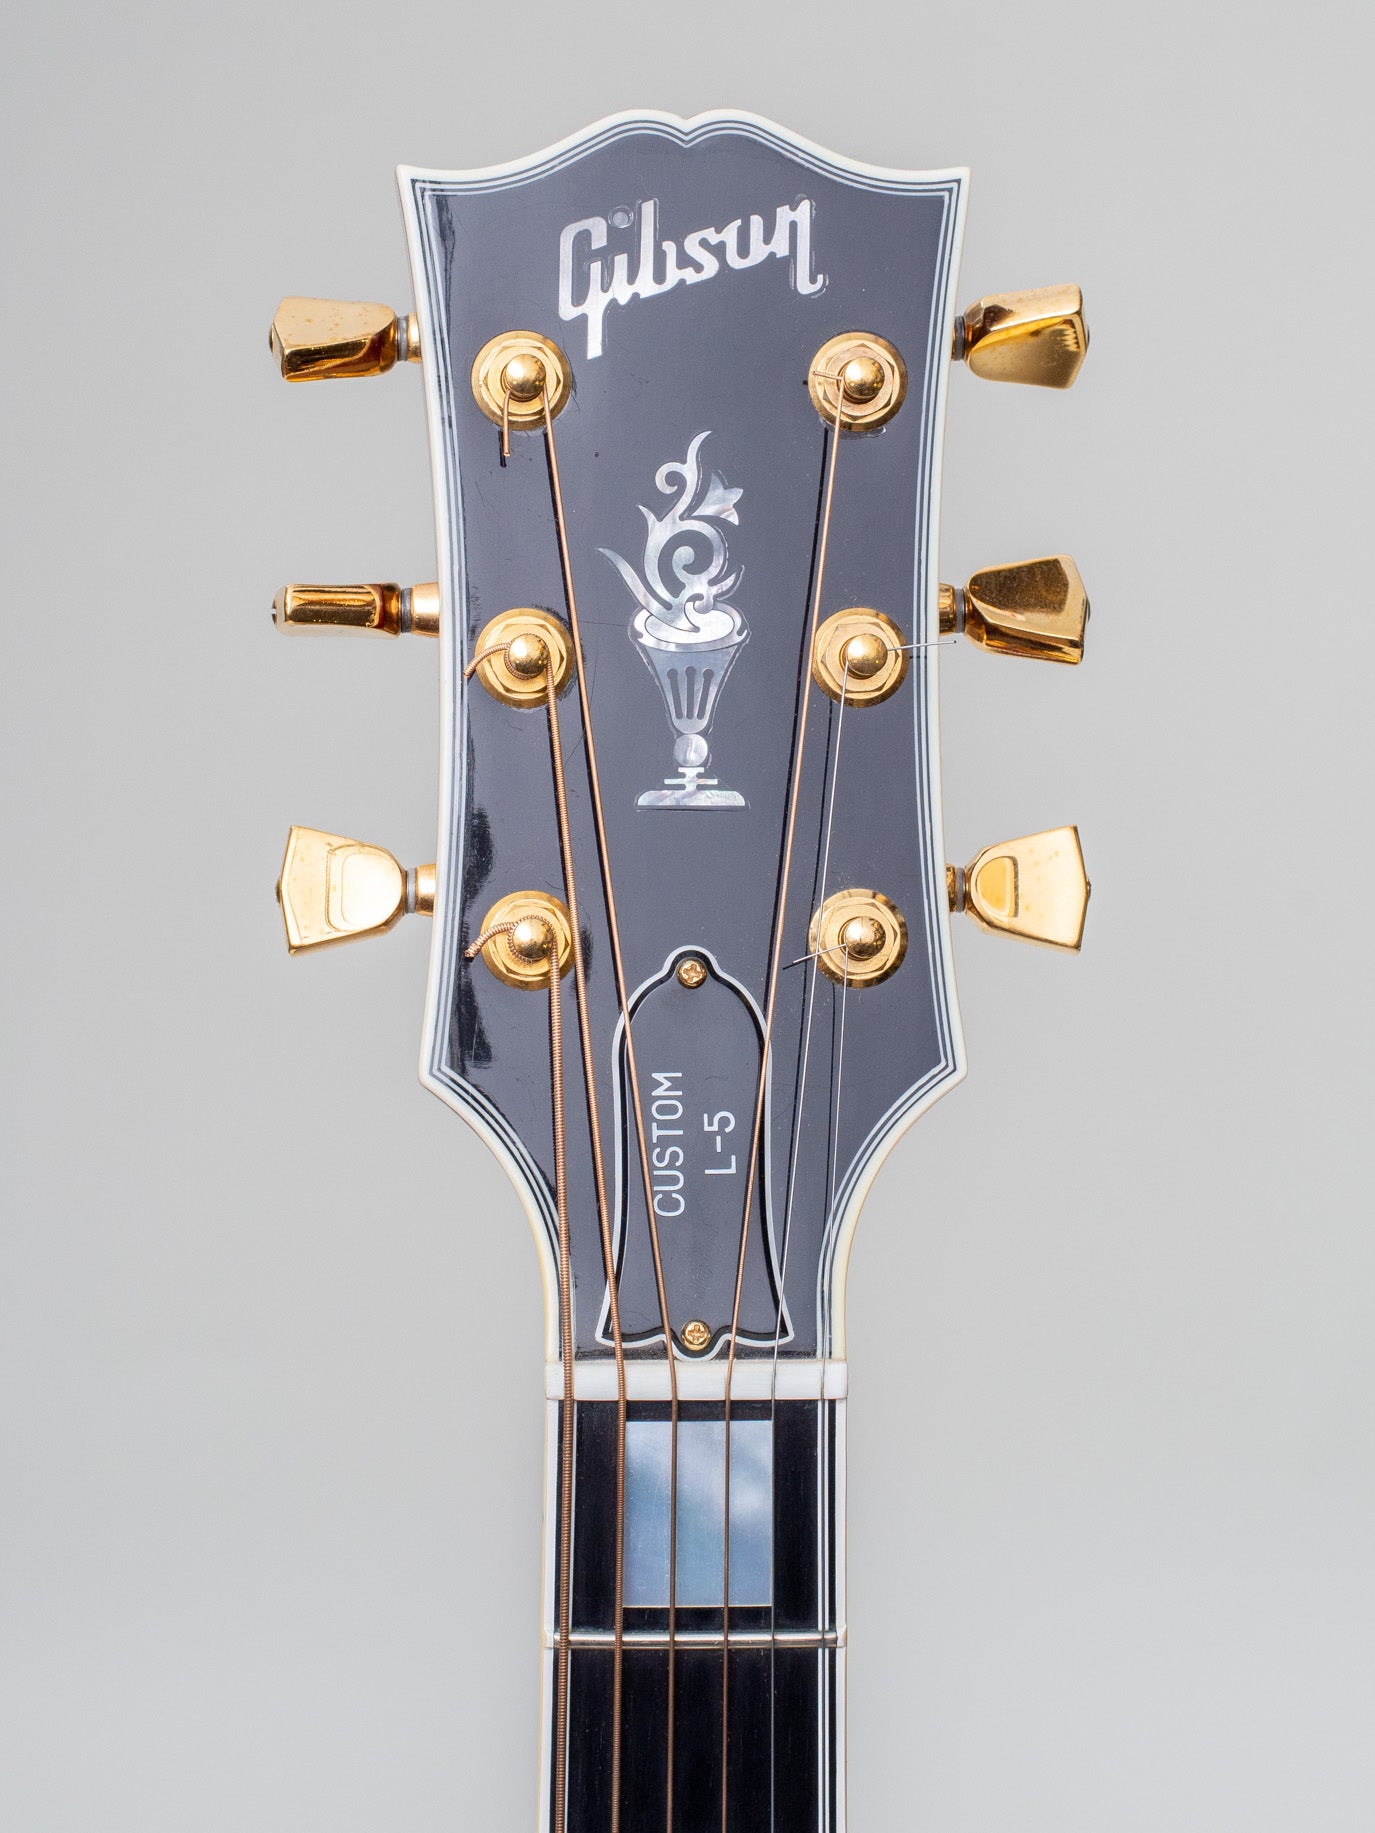 1998 Gibson L-5c Custom